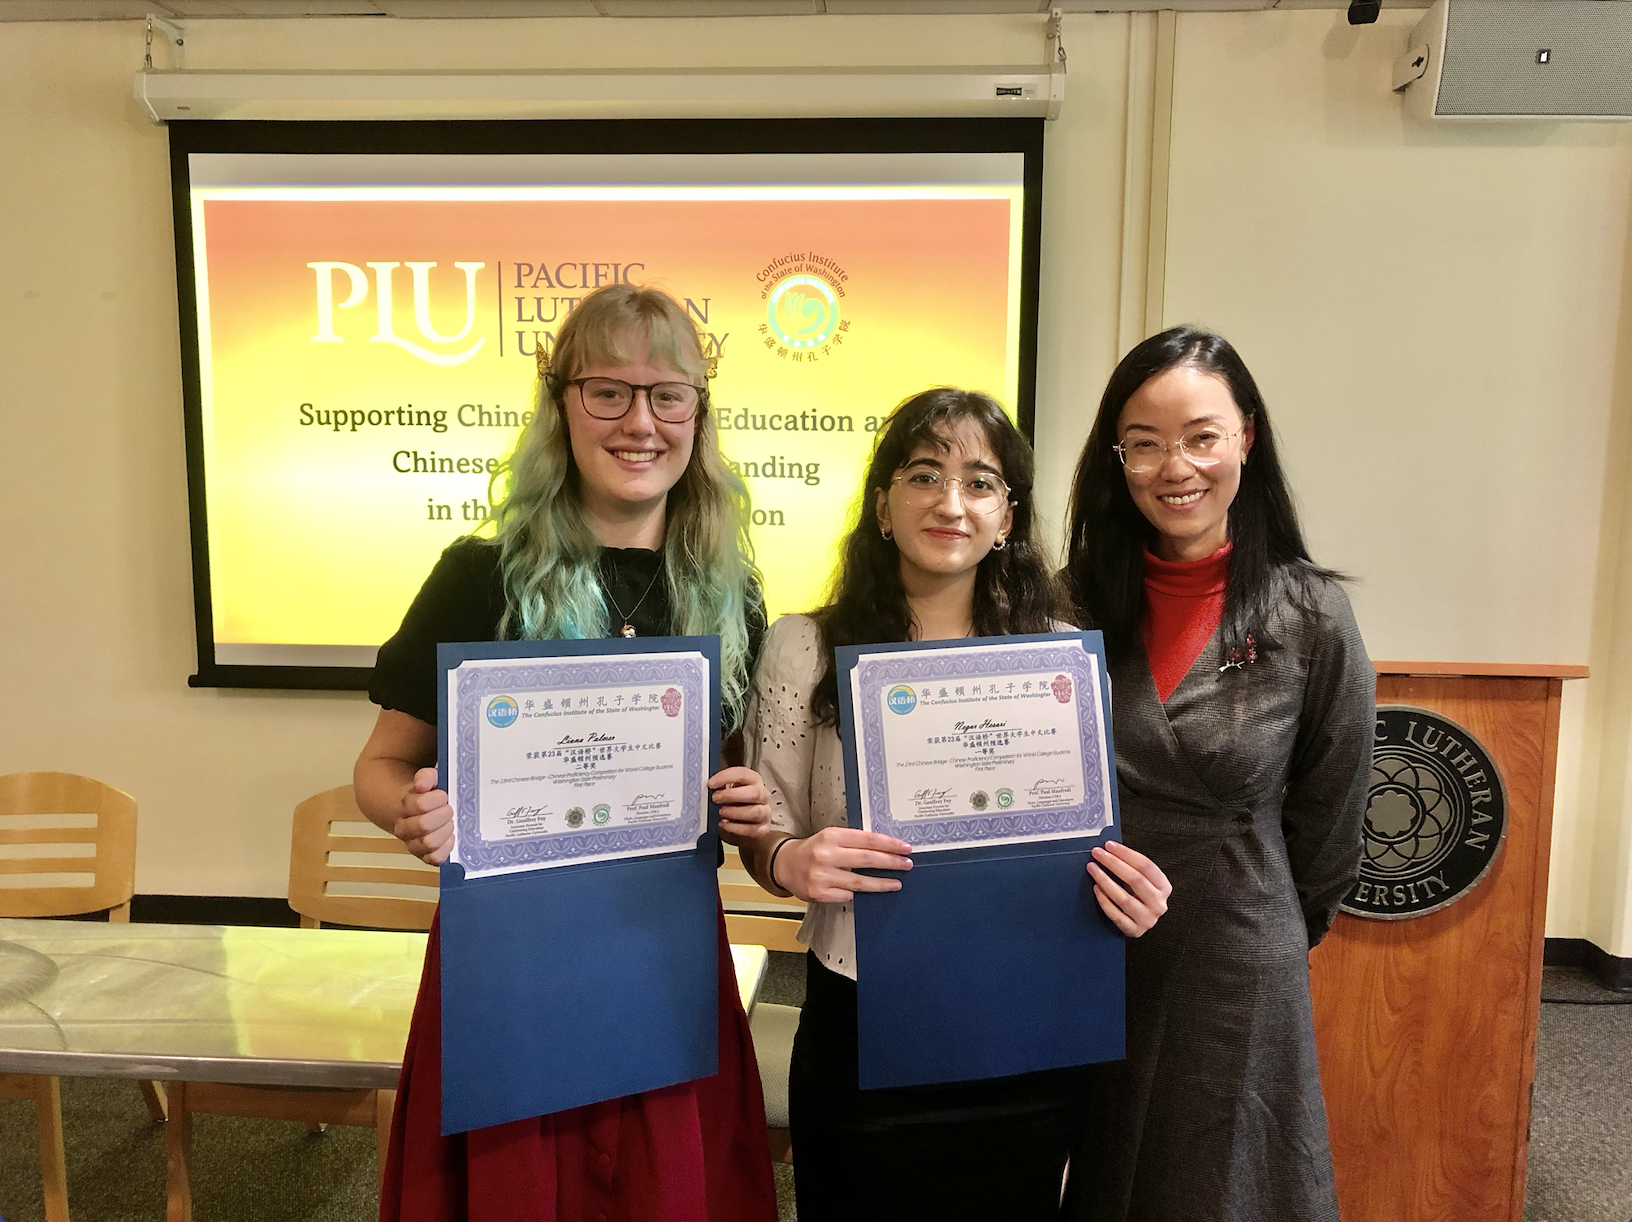 Liana, Lilly, and Prof. Liu